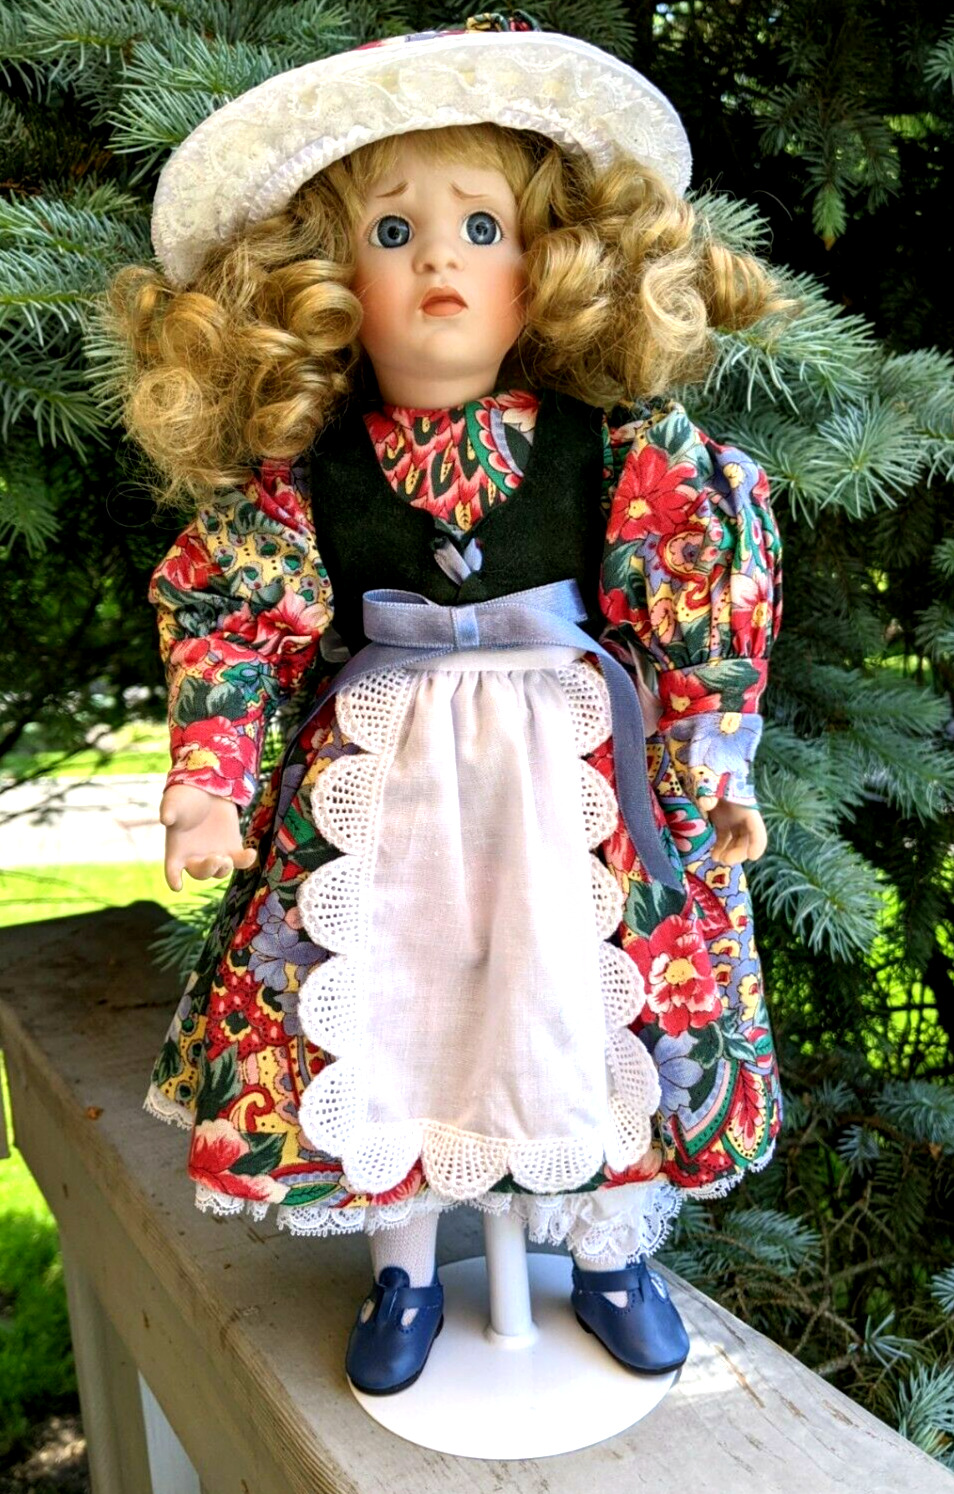 VTG 1994 ASHTON DRAKE MARY MARY QUITE CONTRARY Wendy Lawton Porcelain Doll 15